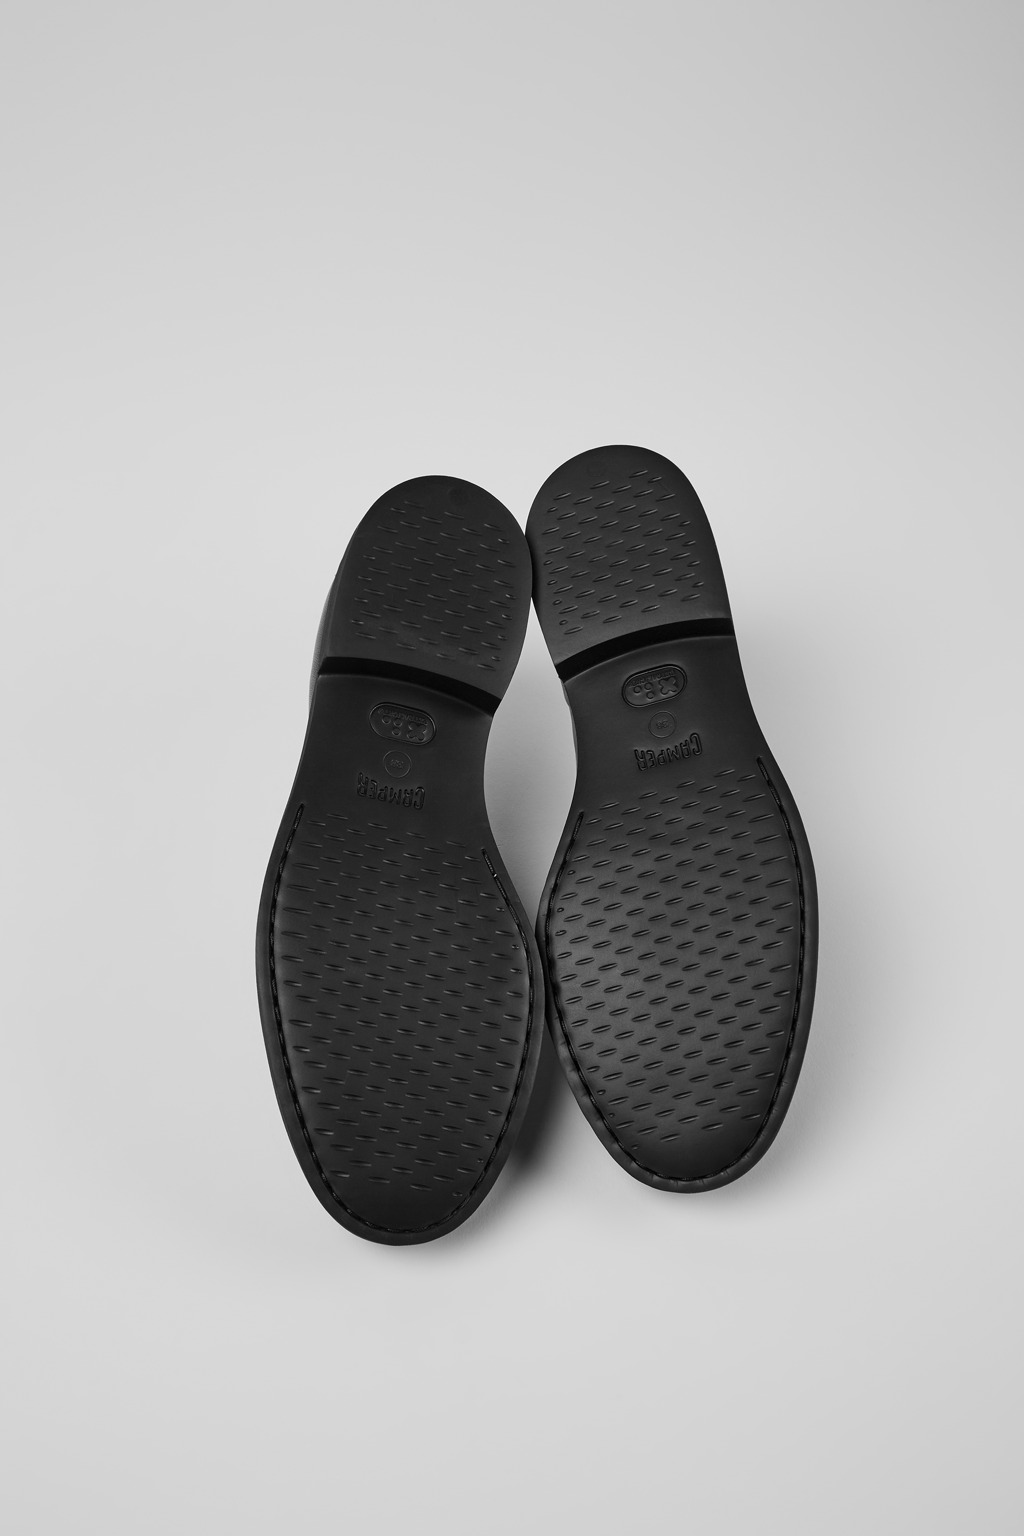 Iman Black Formal Shoes for Women - Camper Shoes